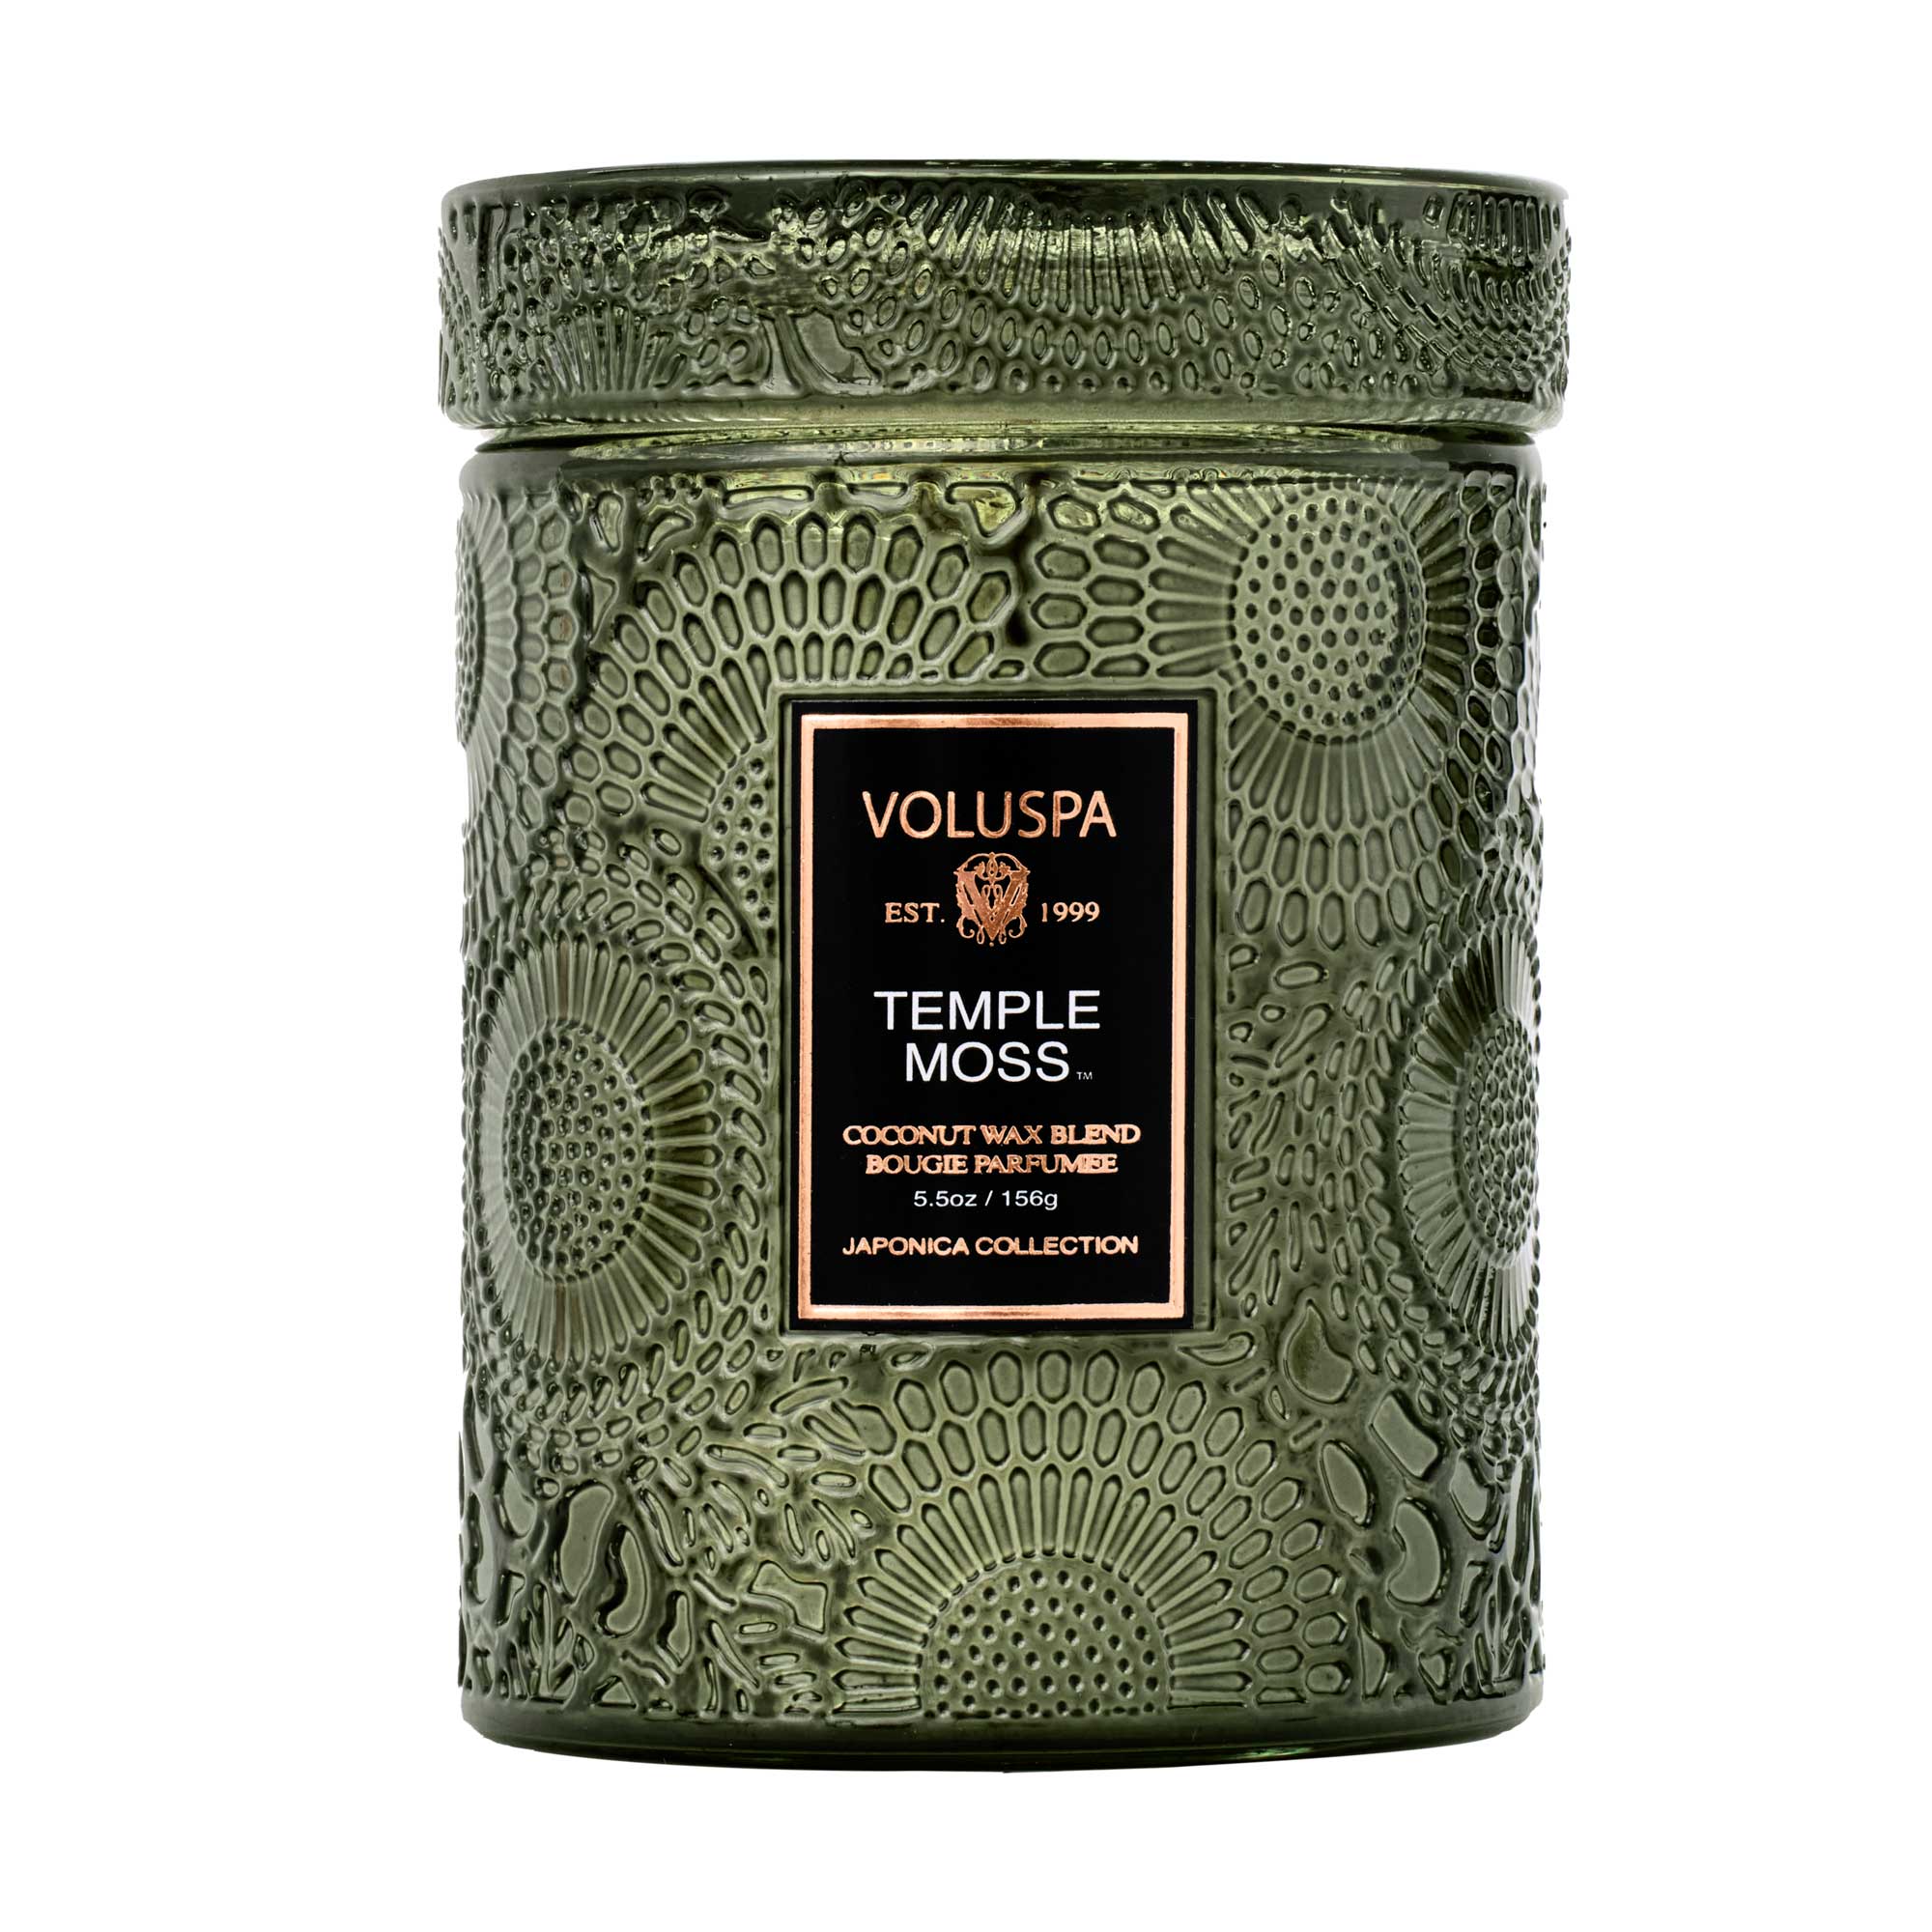 Voluspa Small Jar Candle / Temple Moss